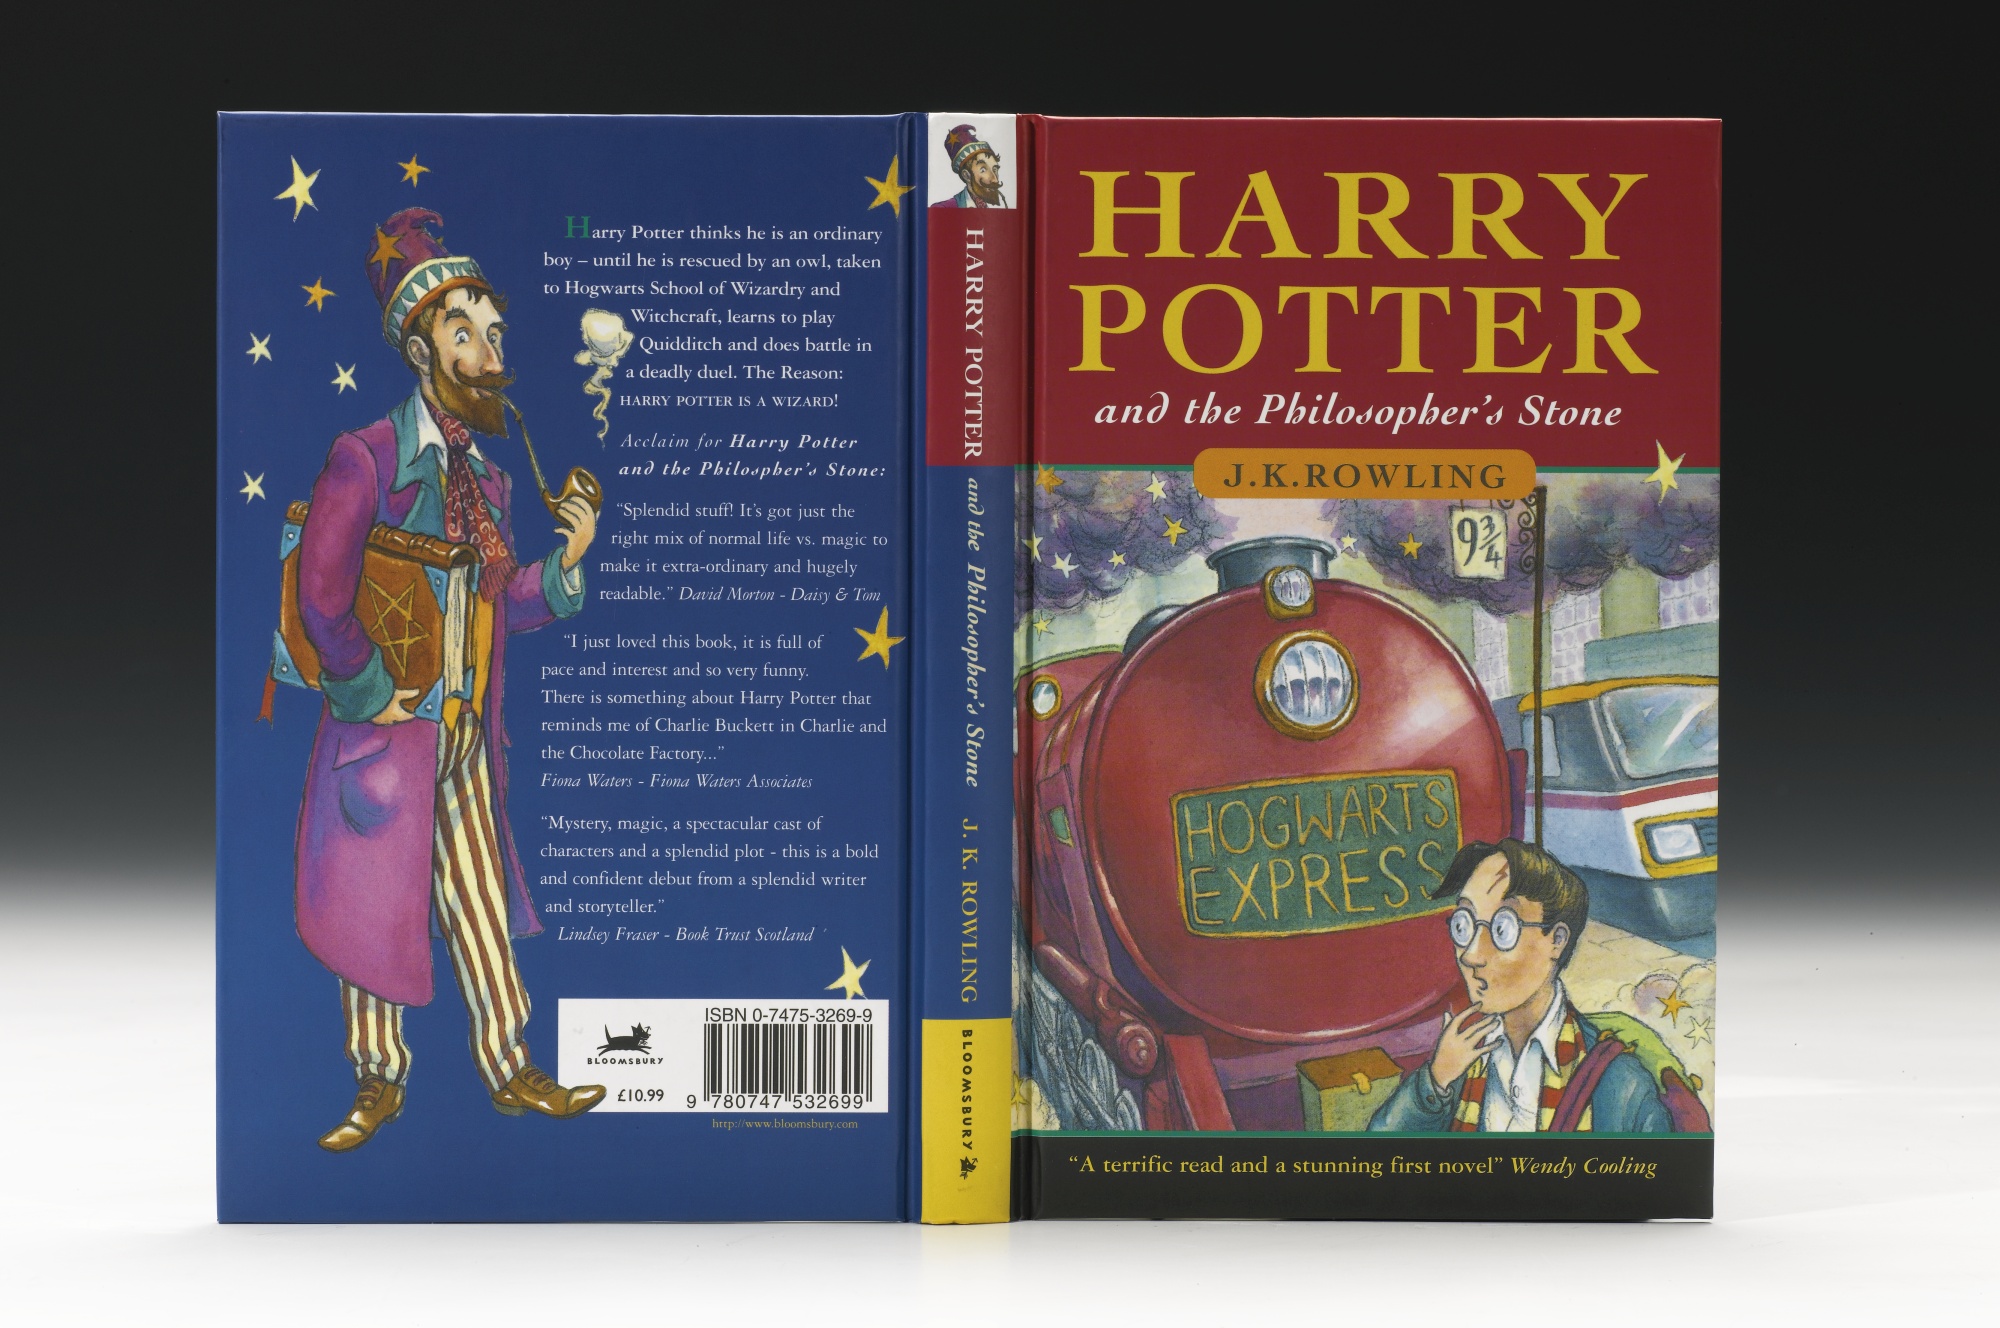 Edición 20 Aniversario para primer libro de Harry Potter